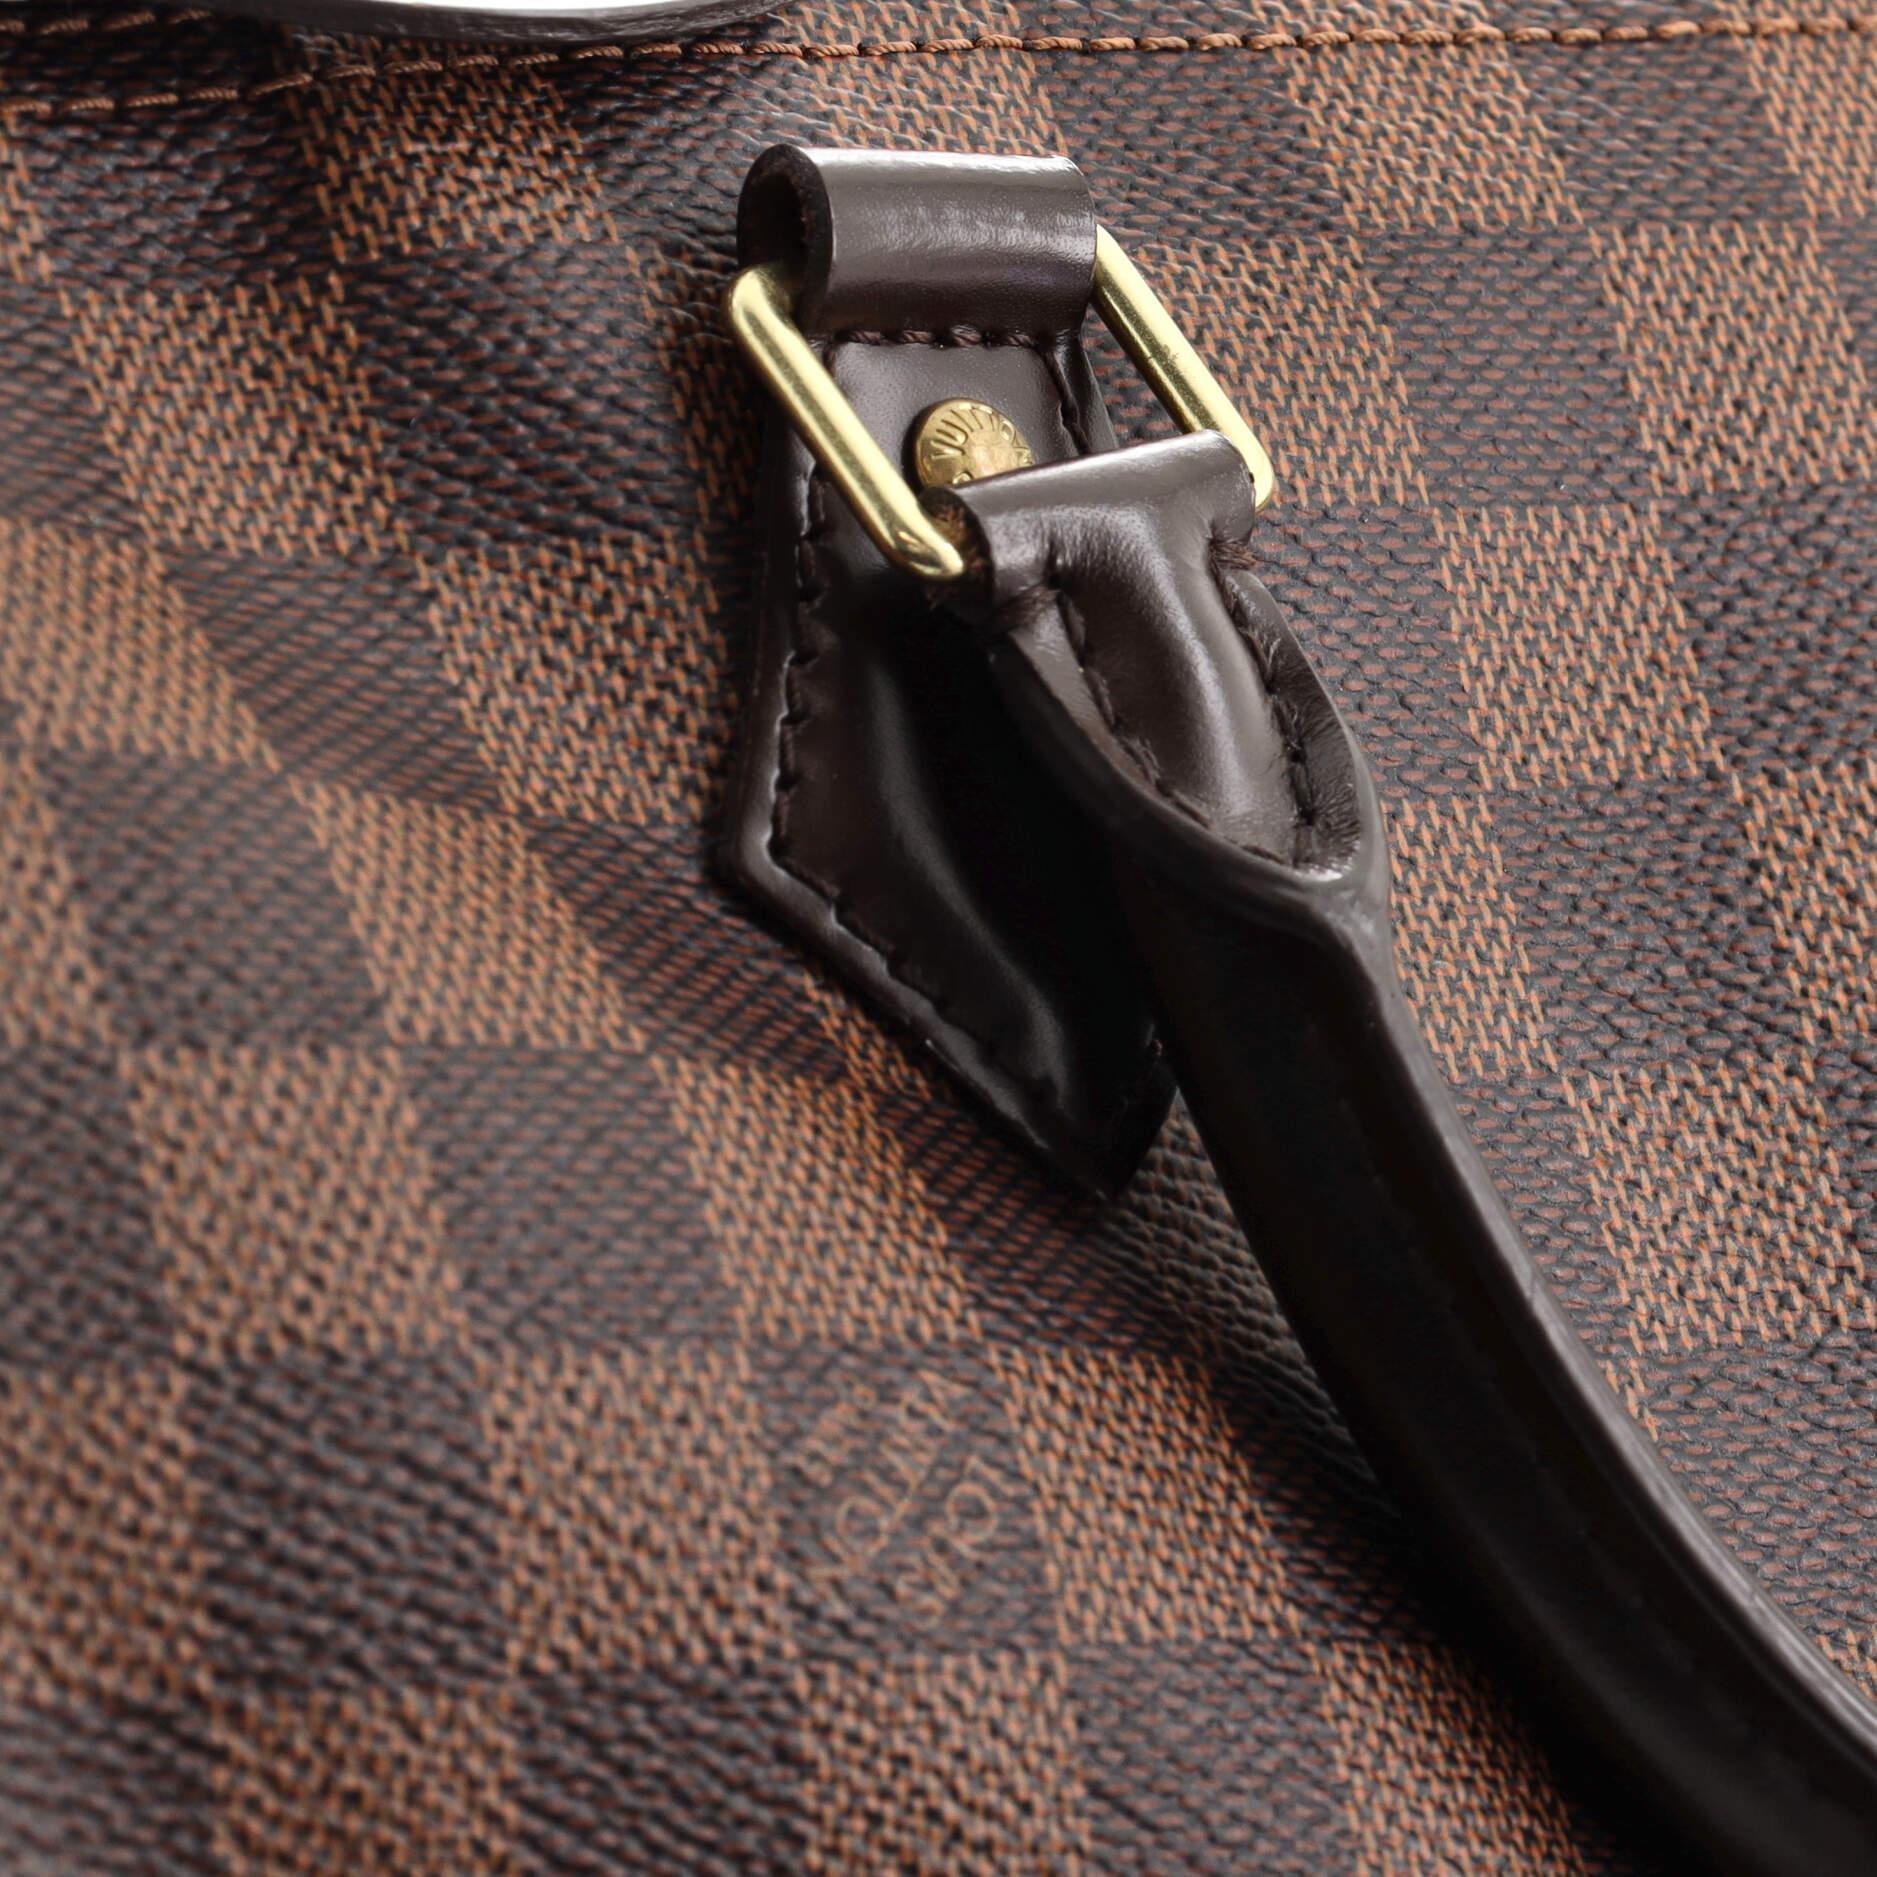 Women's or Men's Louis Vuitton Speedy Handbag Damier 25